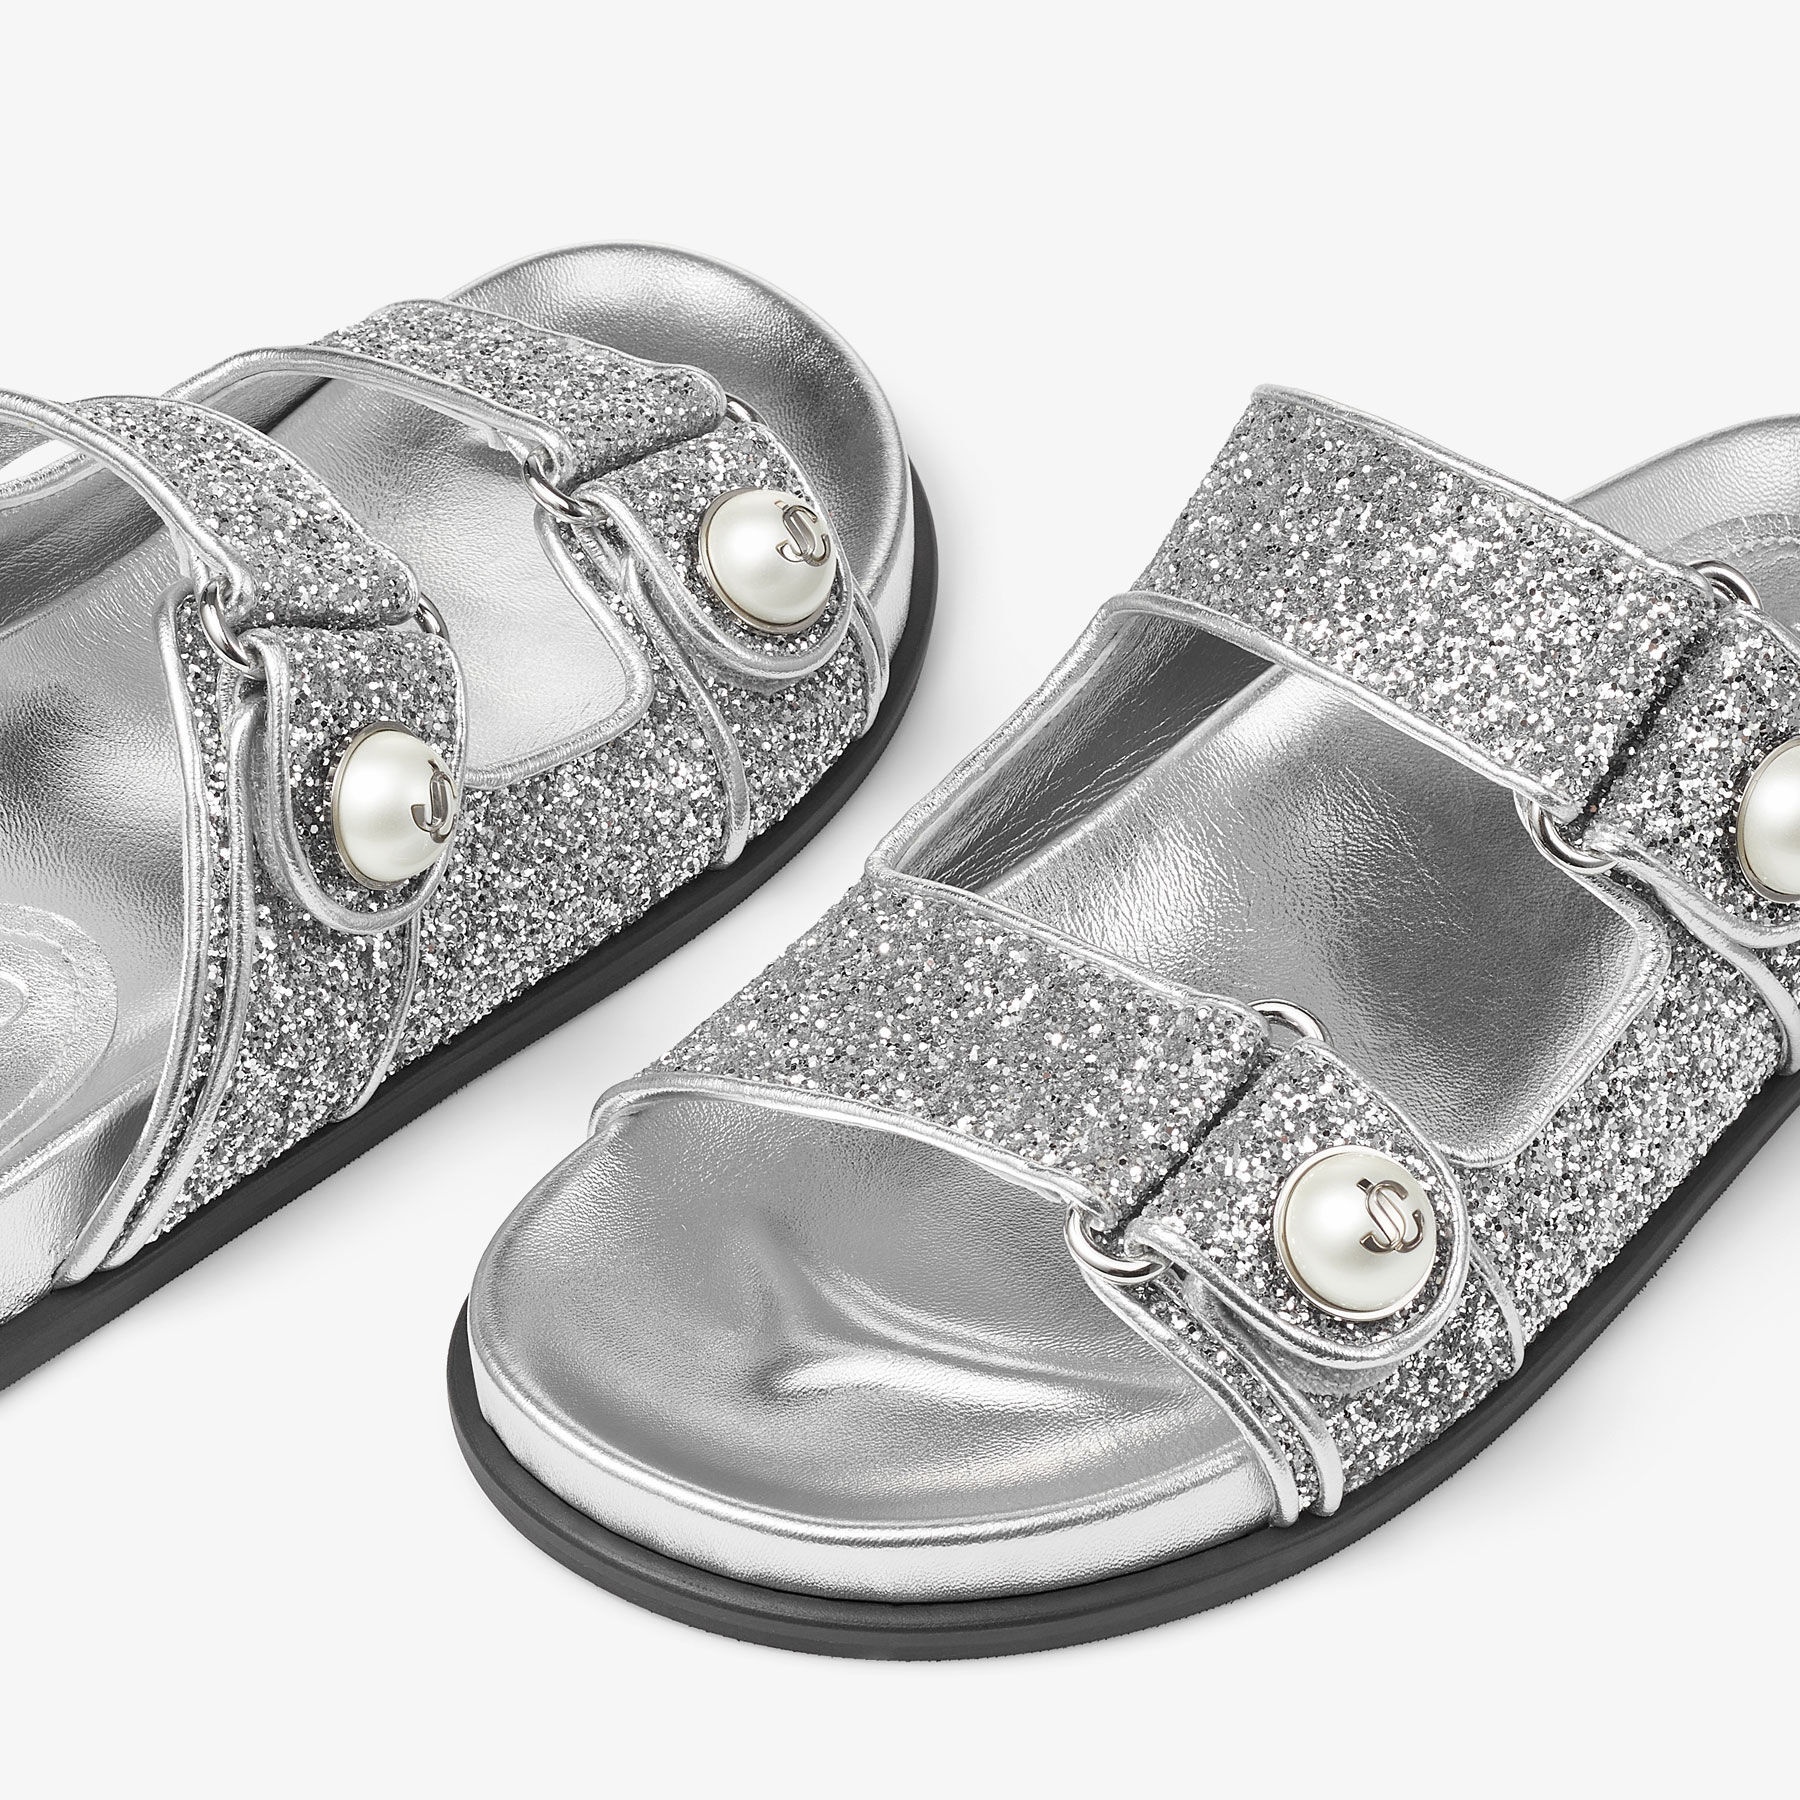 Fayence Sandal
Silver Metallic Nappa Sandals - 3